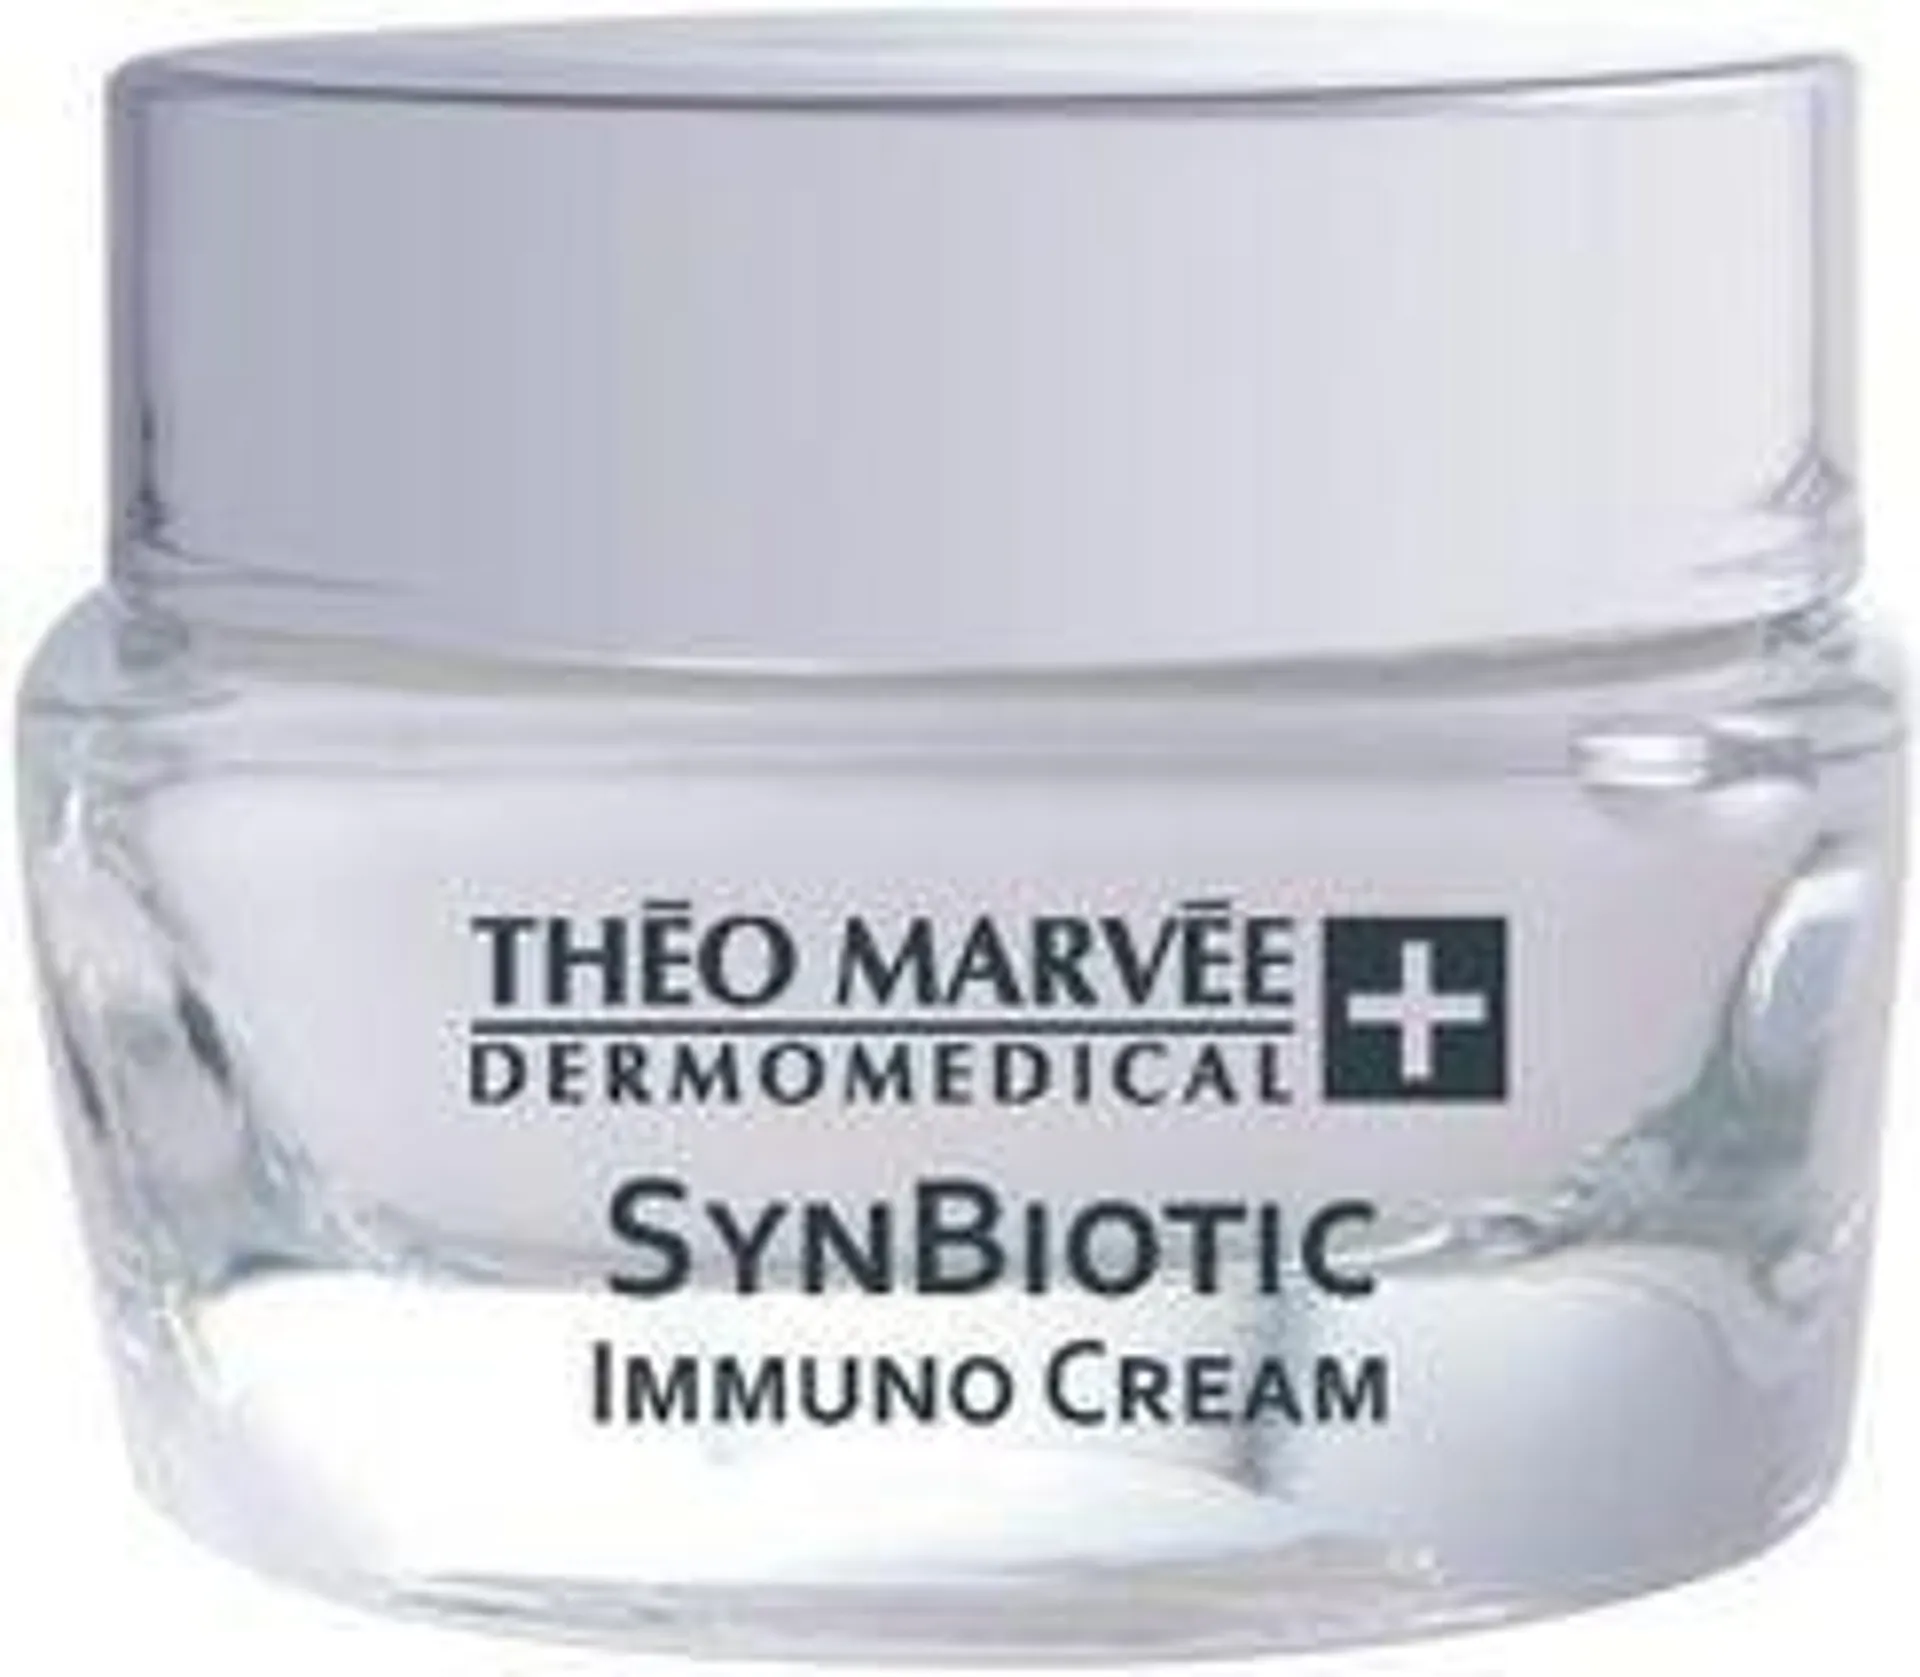 Theo Marvee Synbiotic Immuno Cream Krem Do Skóry Nadwrażliwej 50Ml